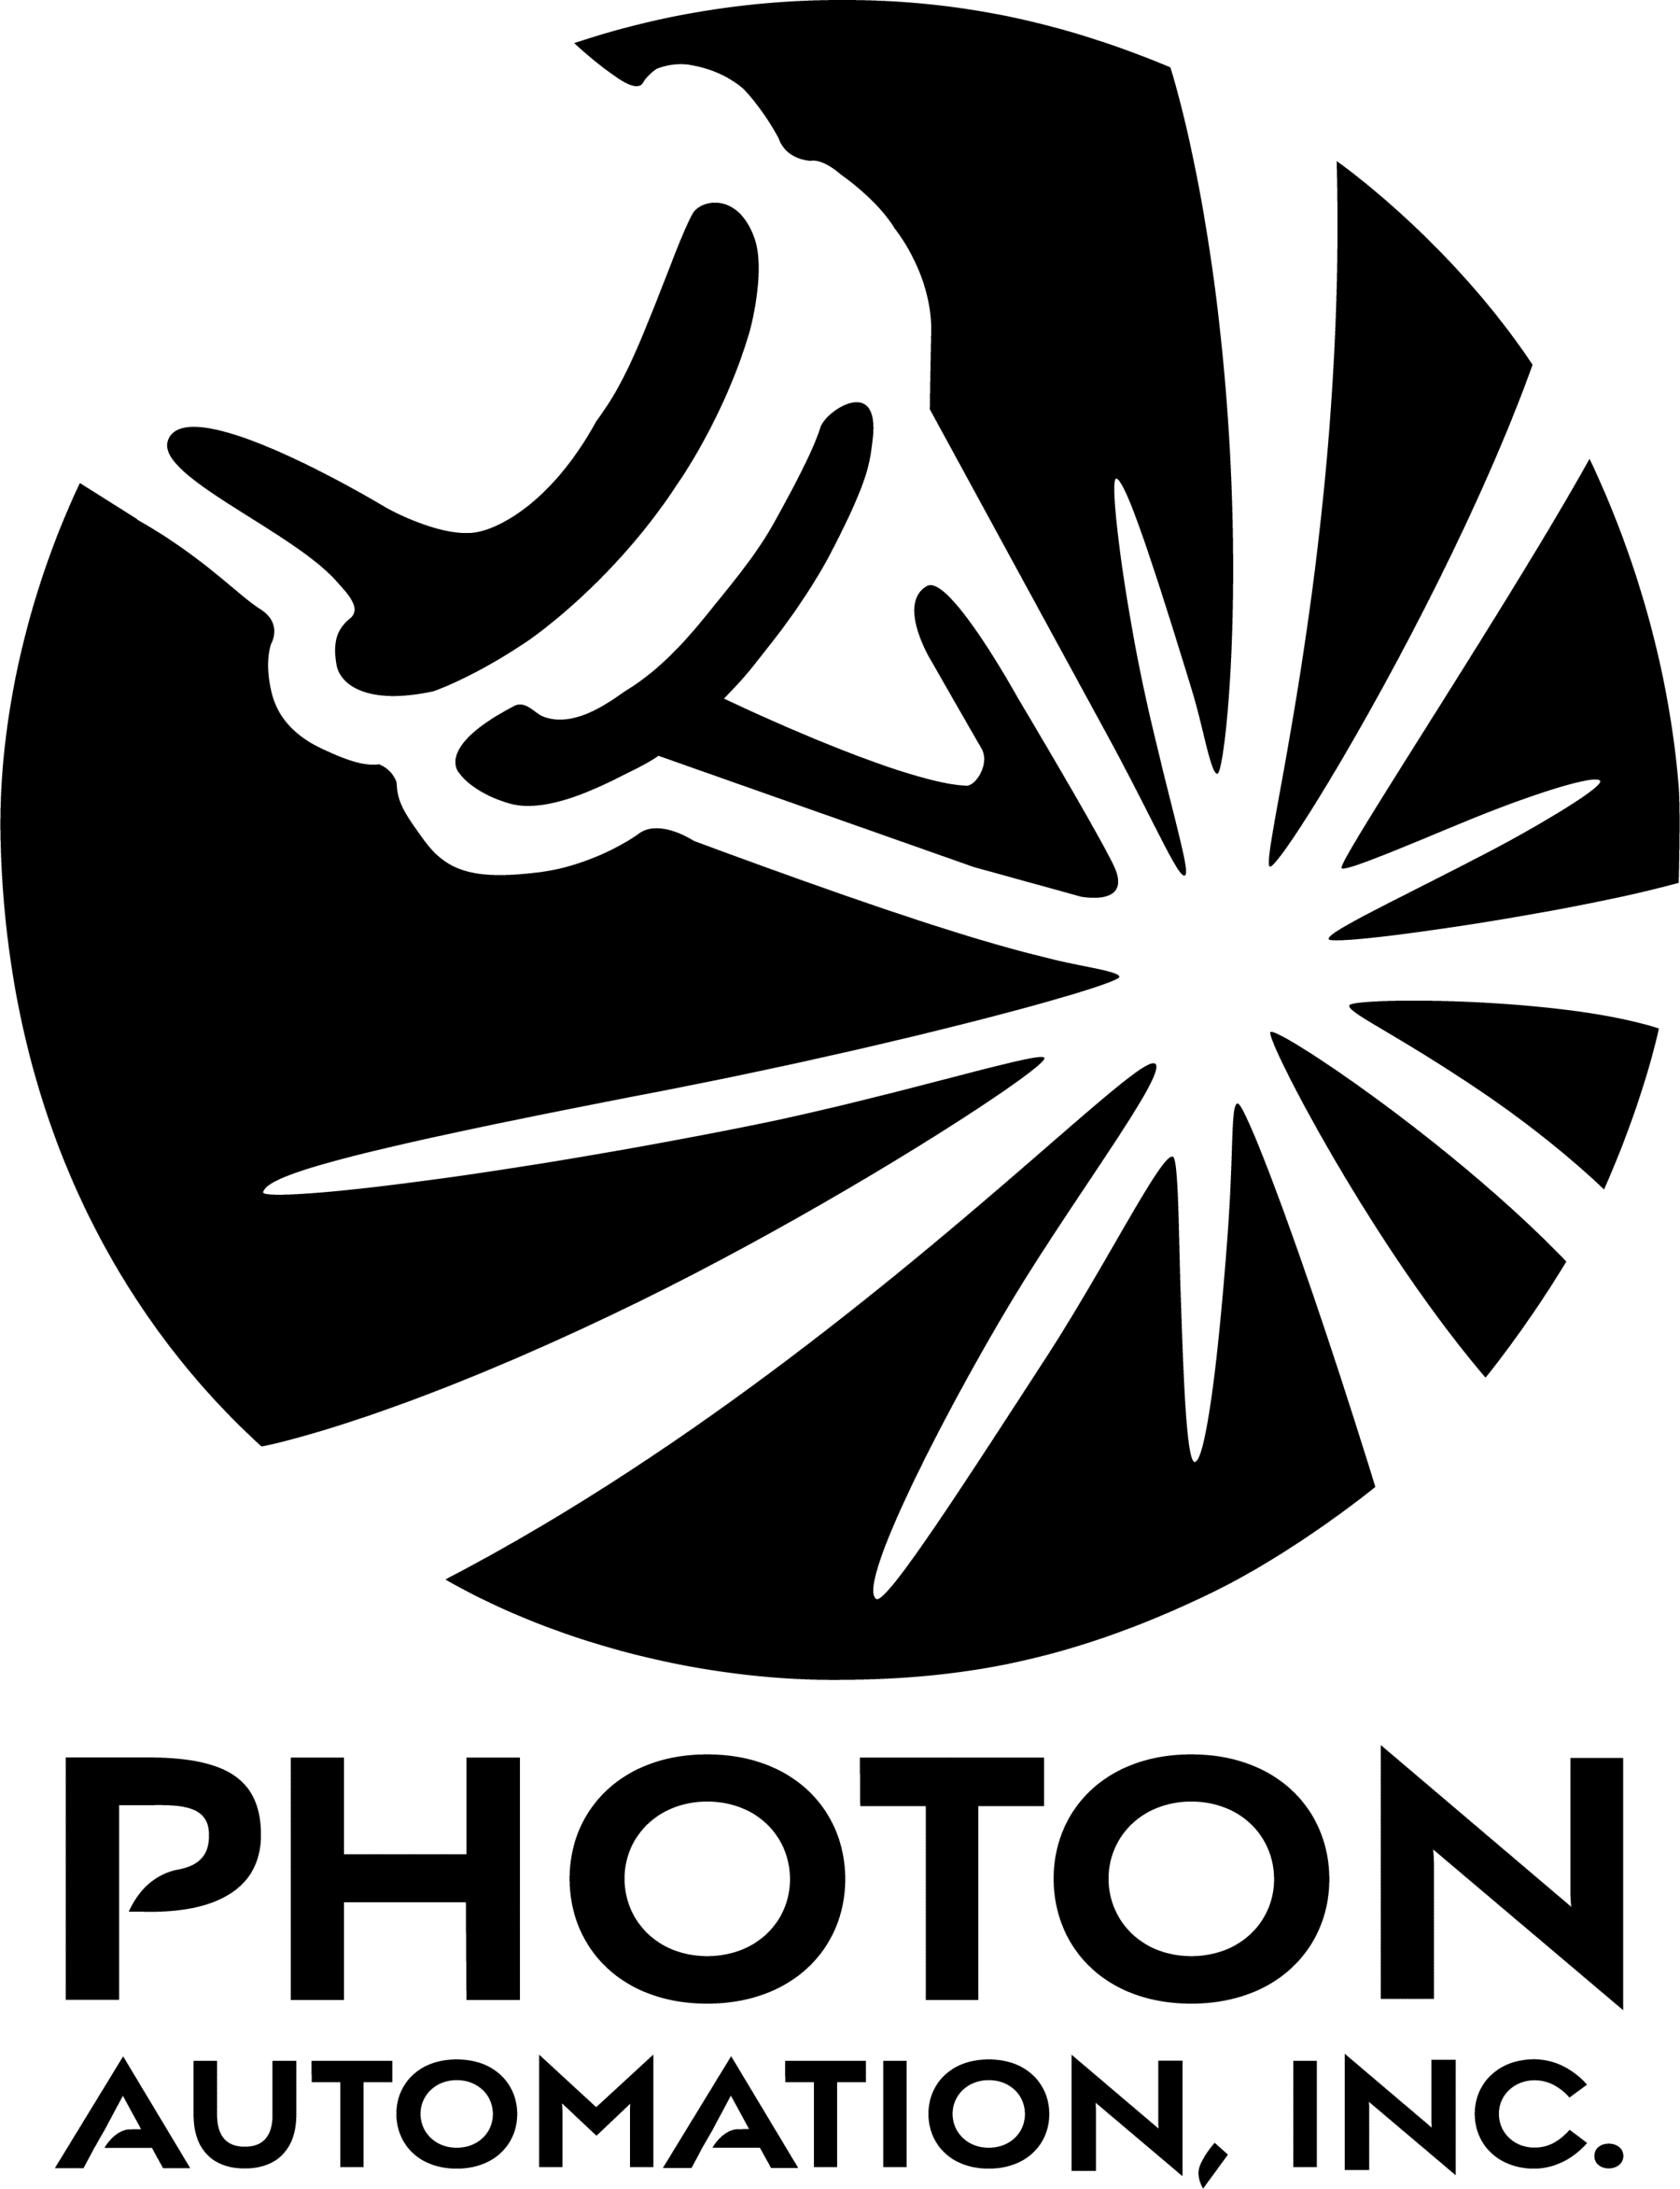 Photon Automation Inc